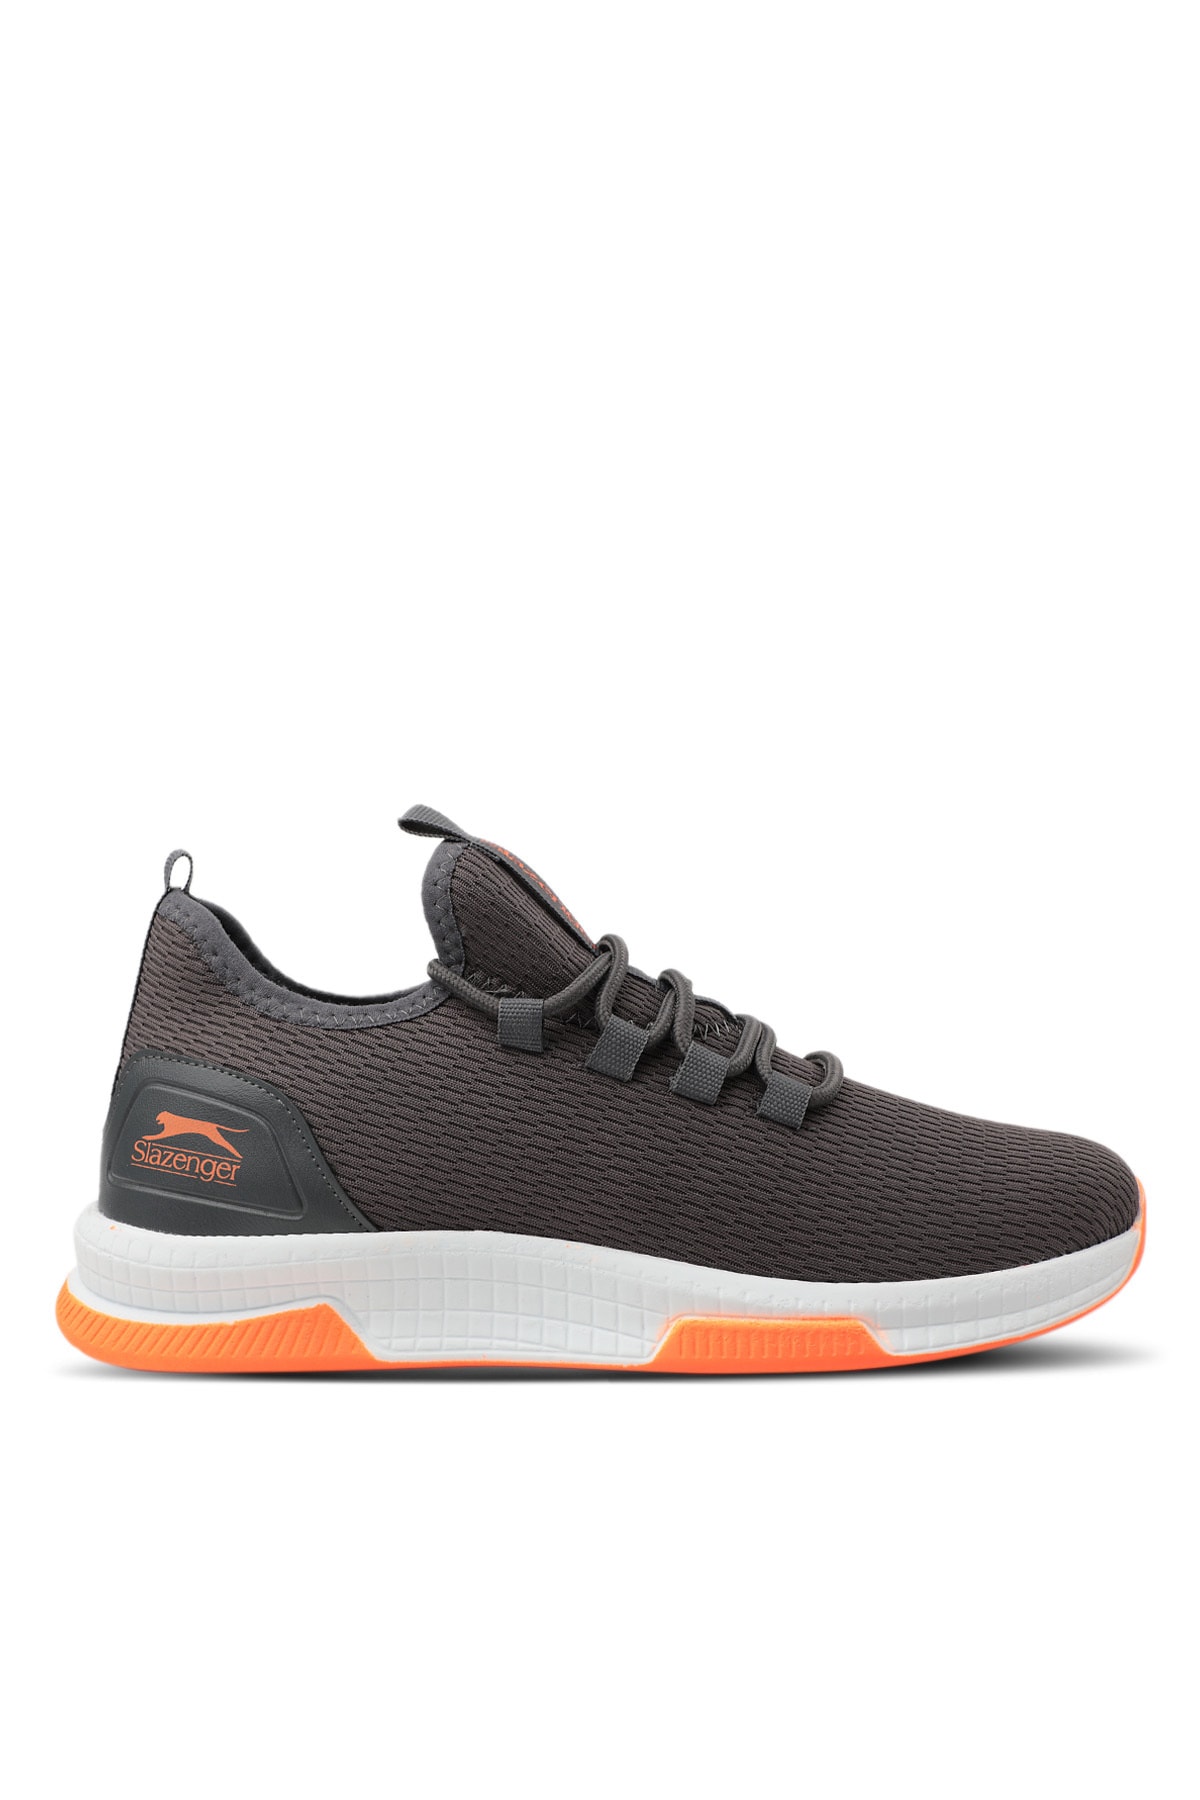 Slazenger Agenda Sneaker Mens Shoes Dark Grey / Orange